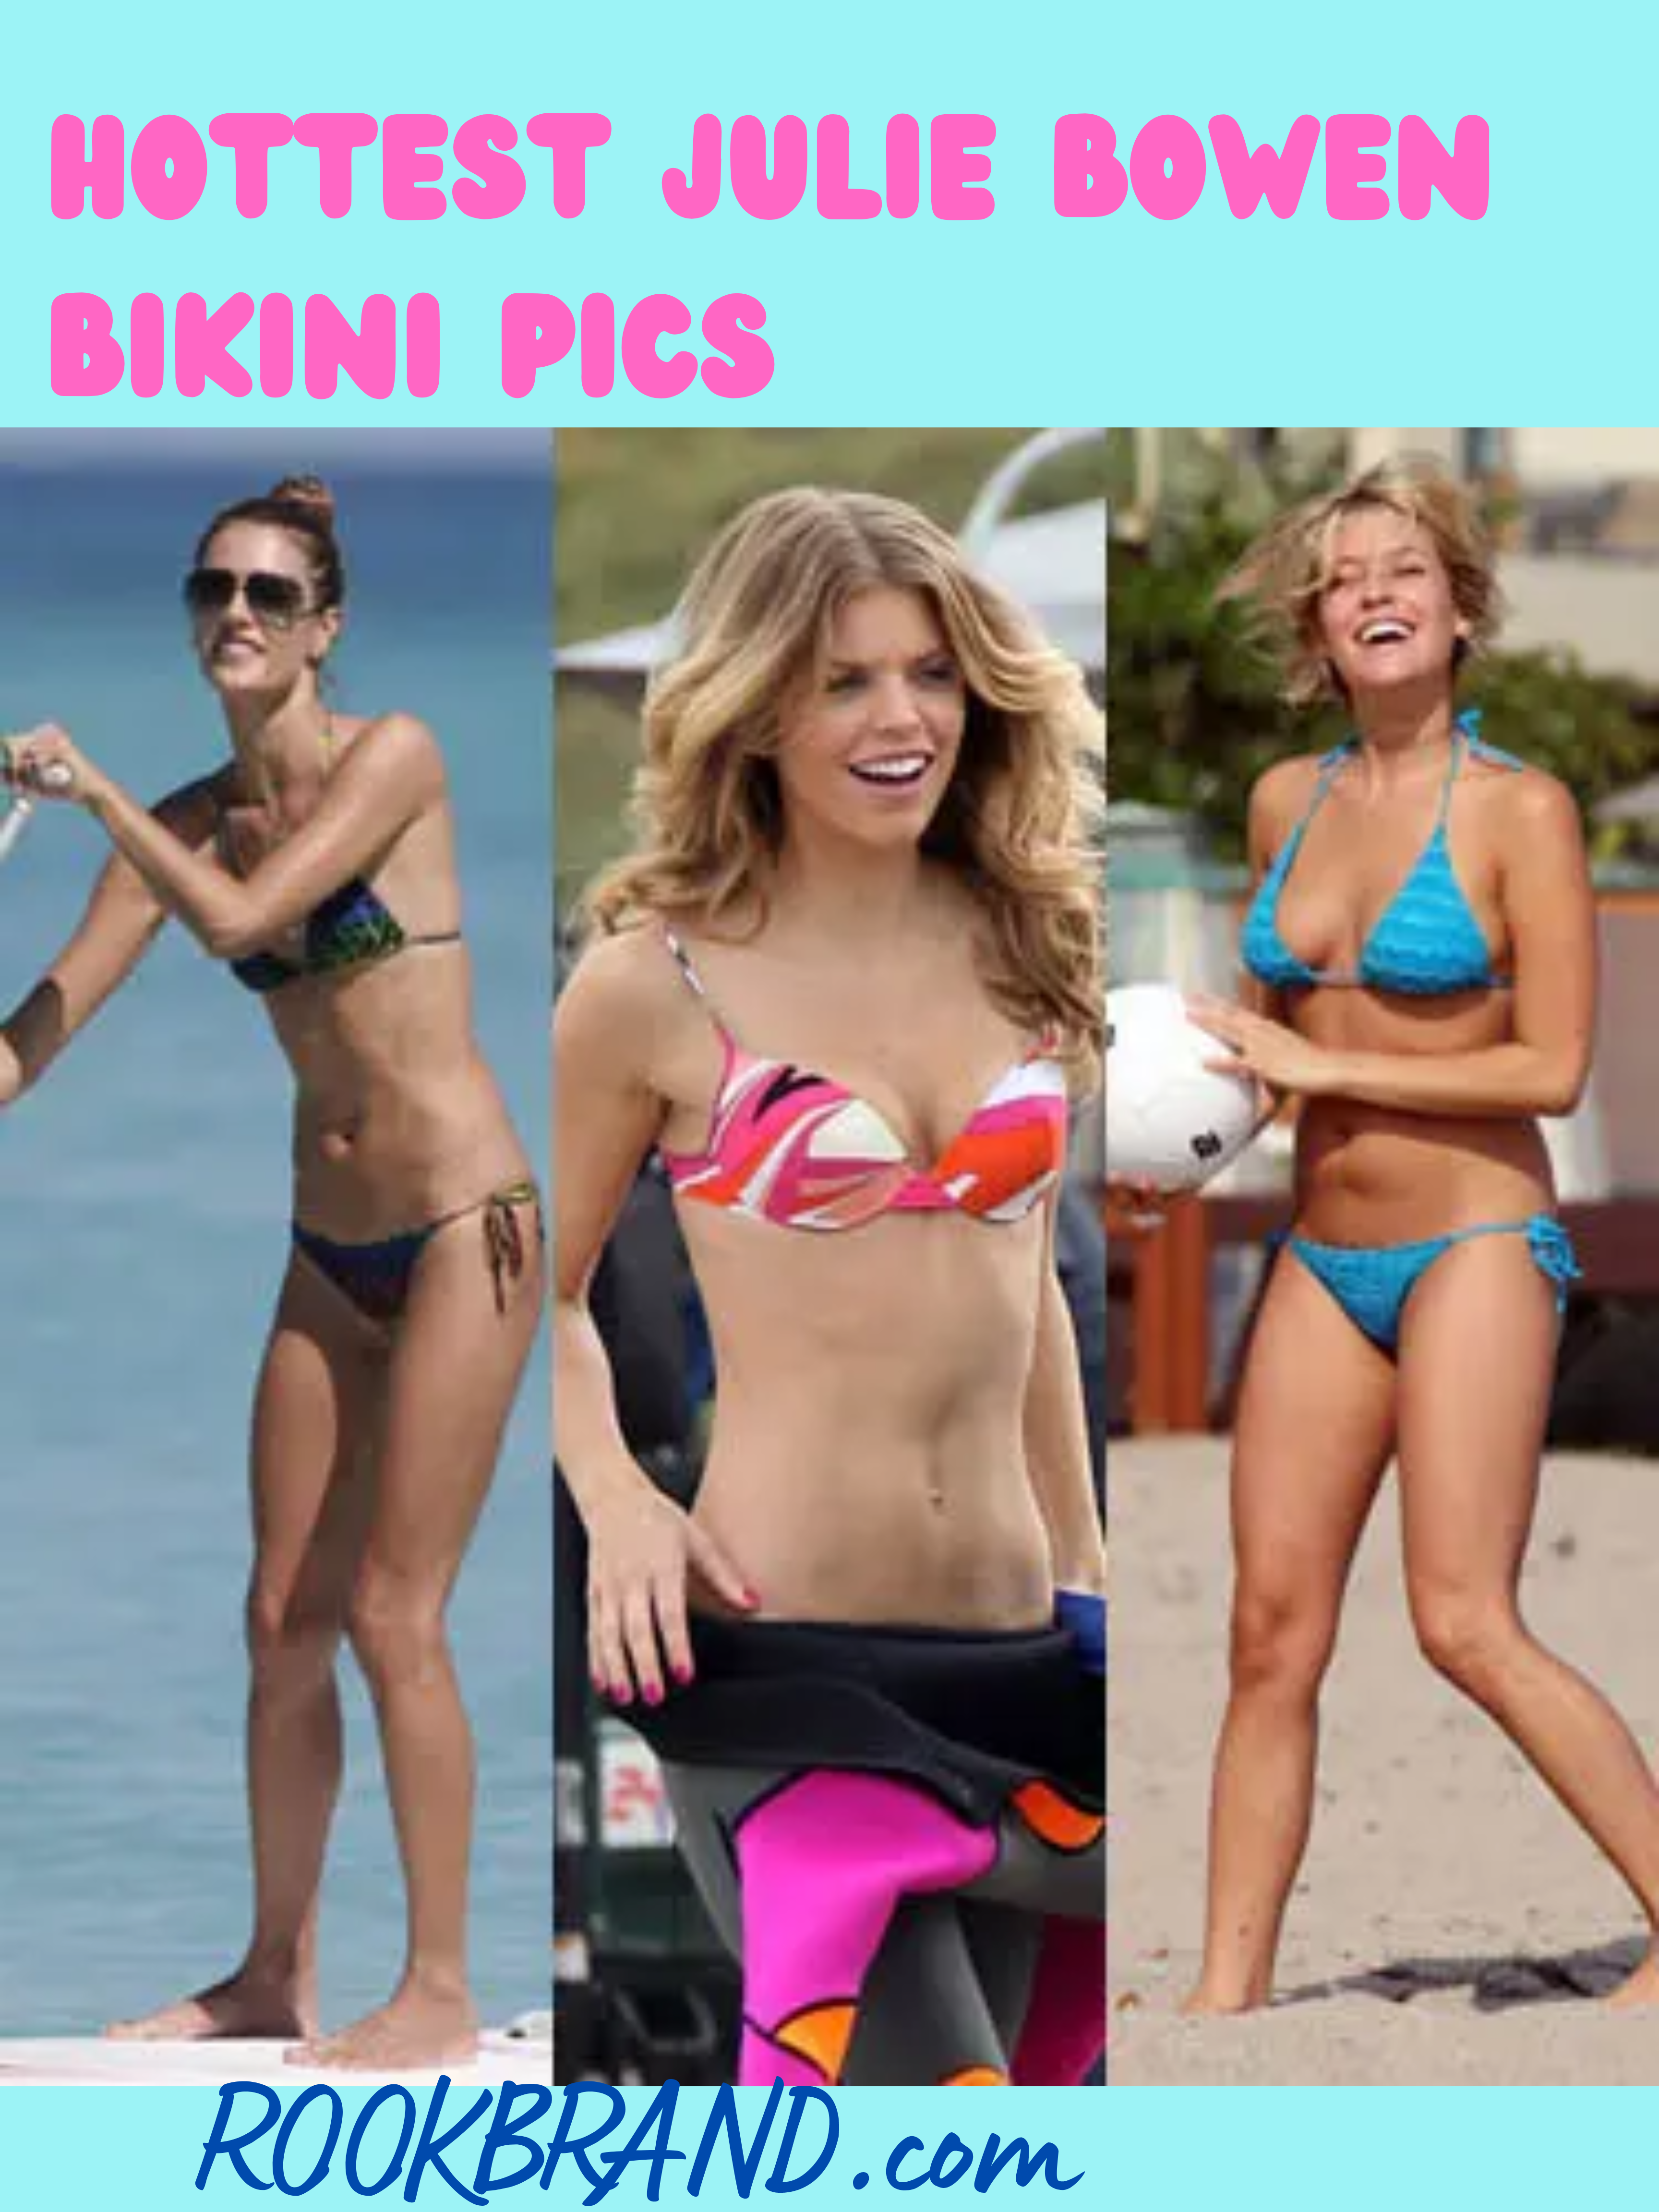 barbara lavin recommends julie bowen in bikini pic